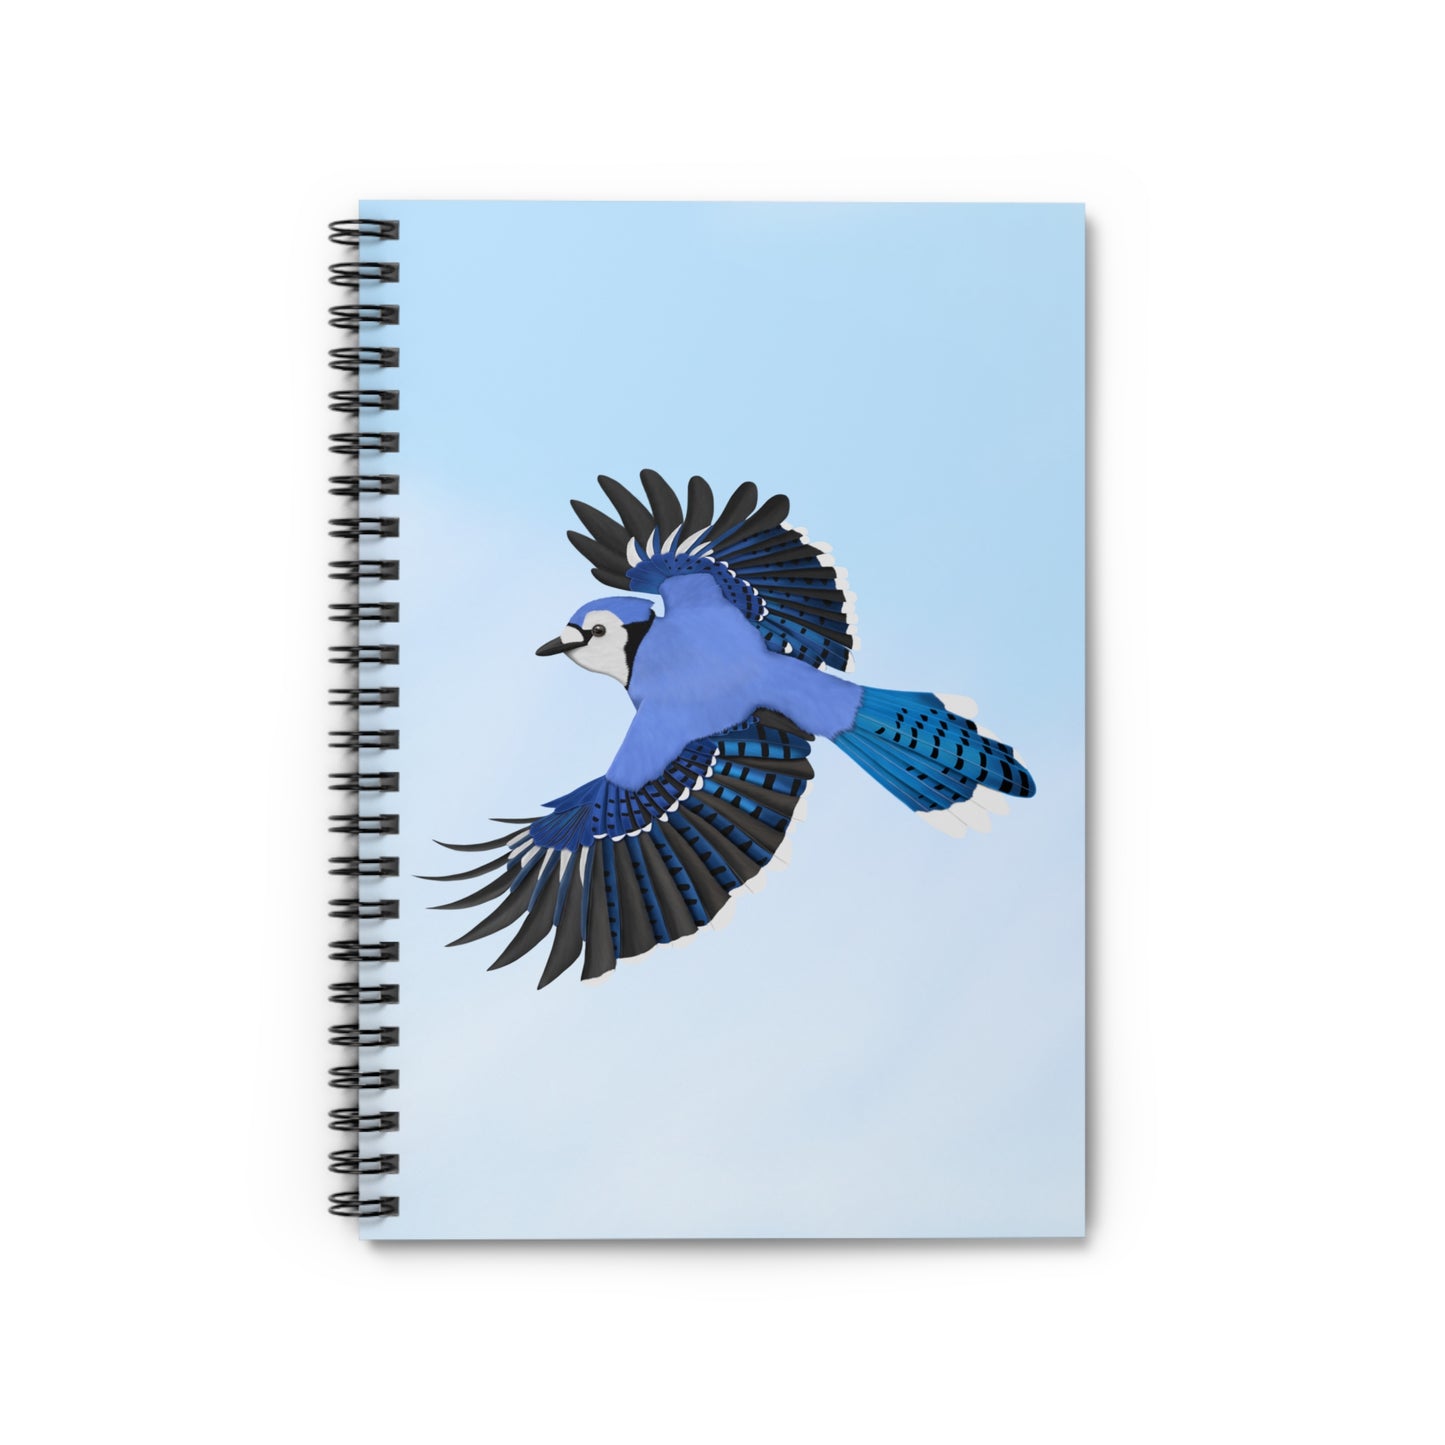 Blue Jay Bird Birdlover Spiral Notebook Ruled Line 6" x 8"